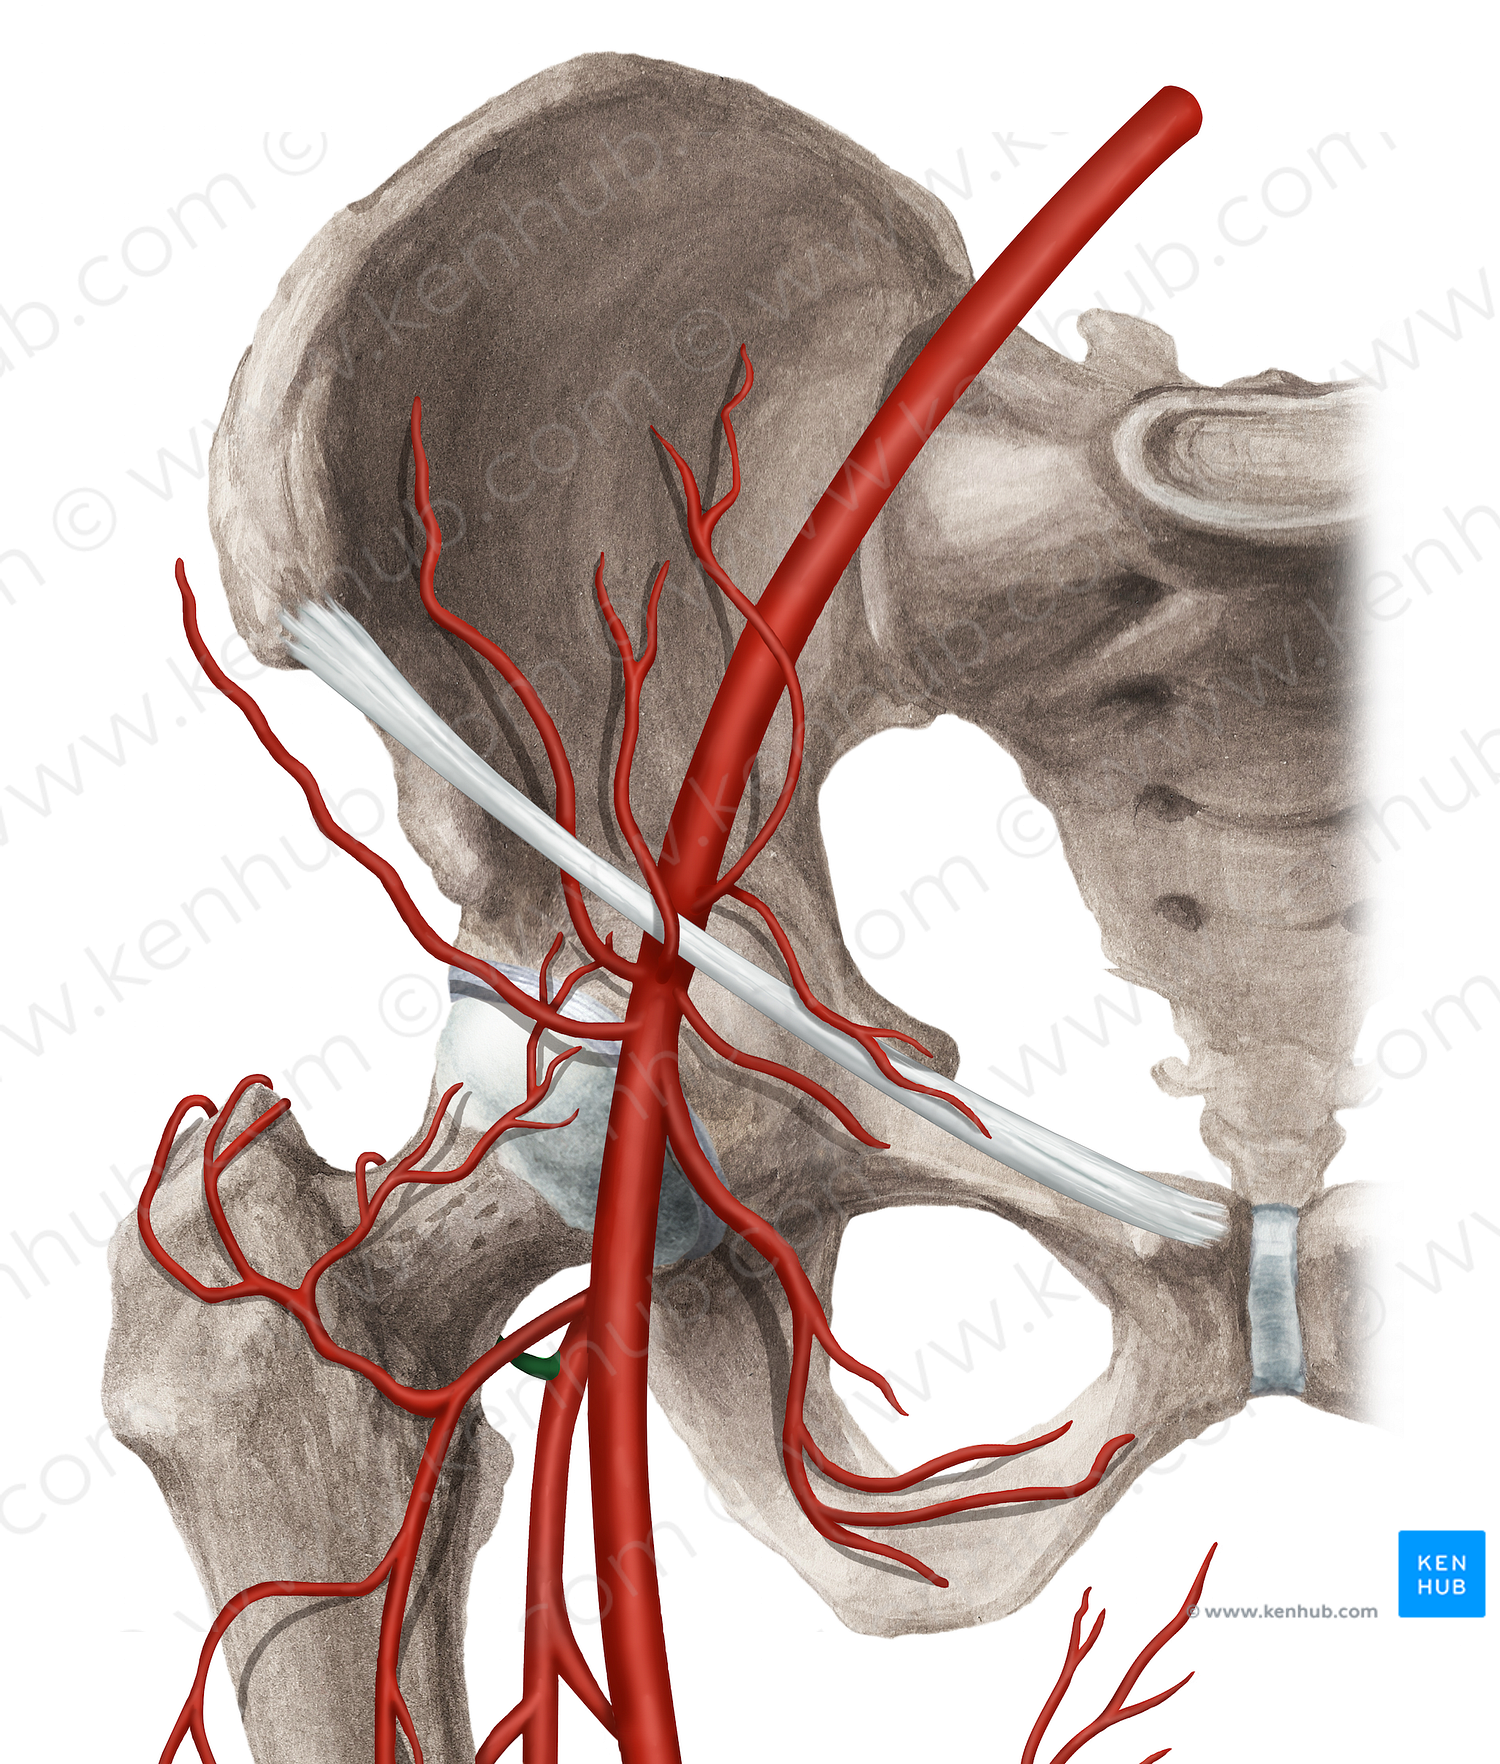 Medial circumflex femoral artery (#1036)